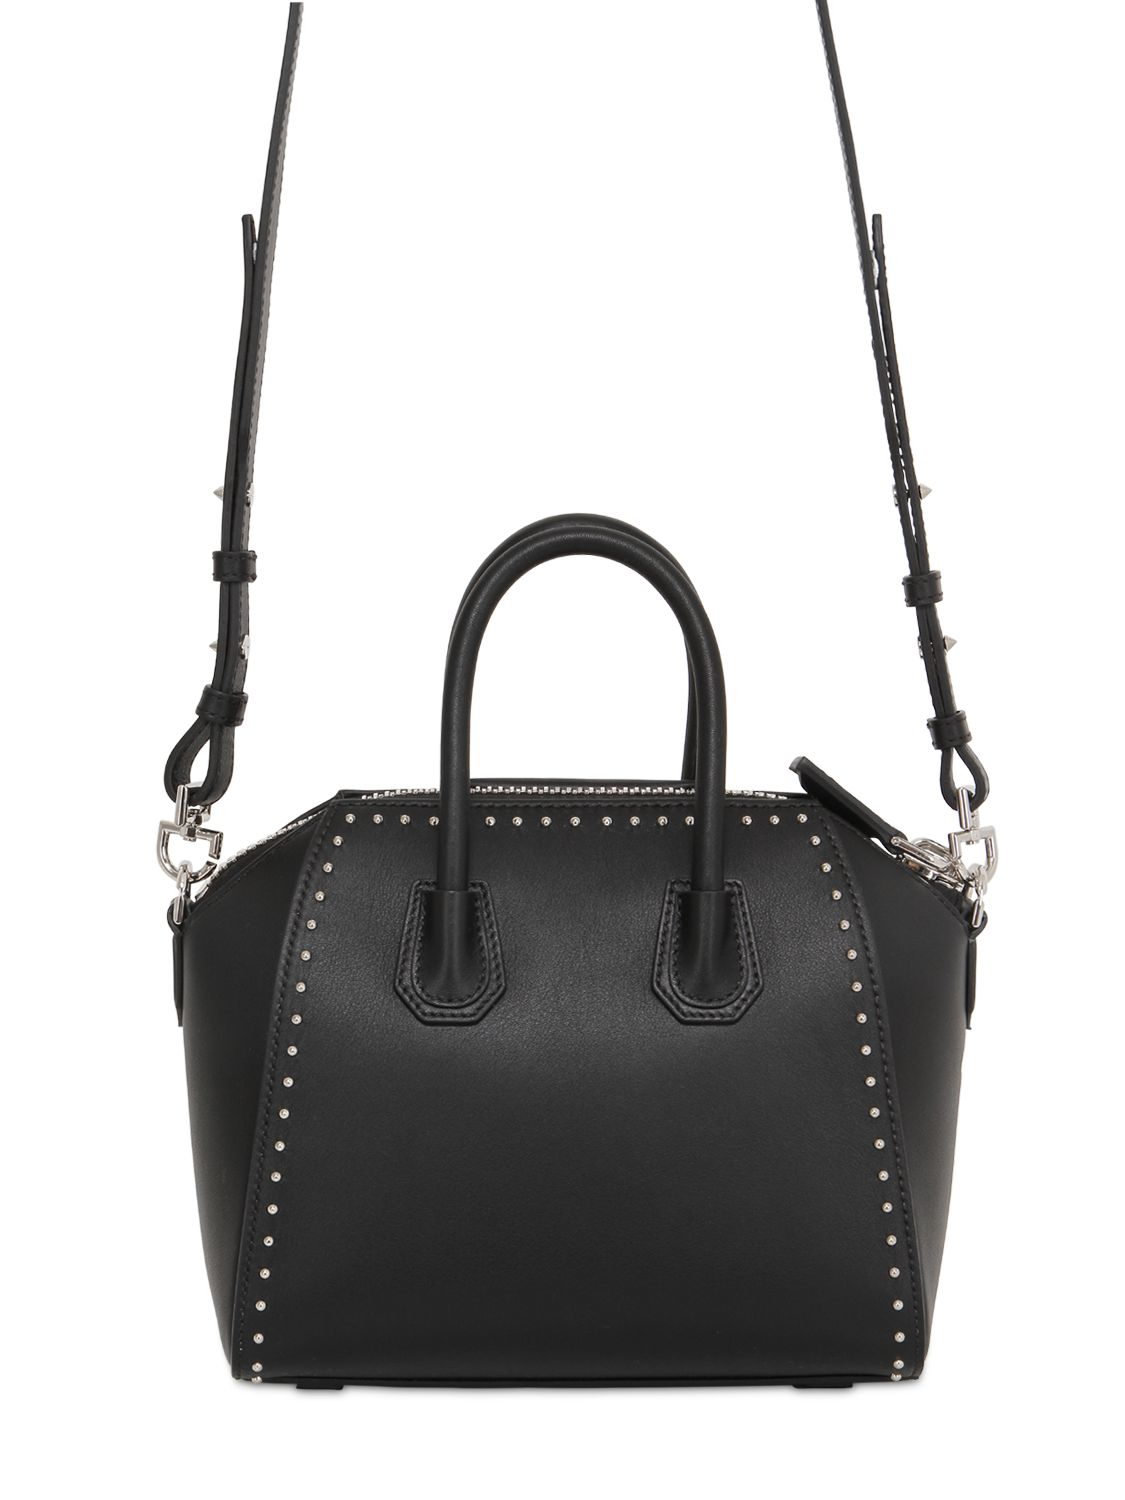 Givenchy Mini Antigona Studded Leather Bag in Black - Lyst